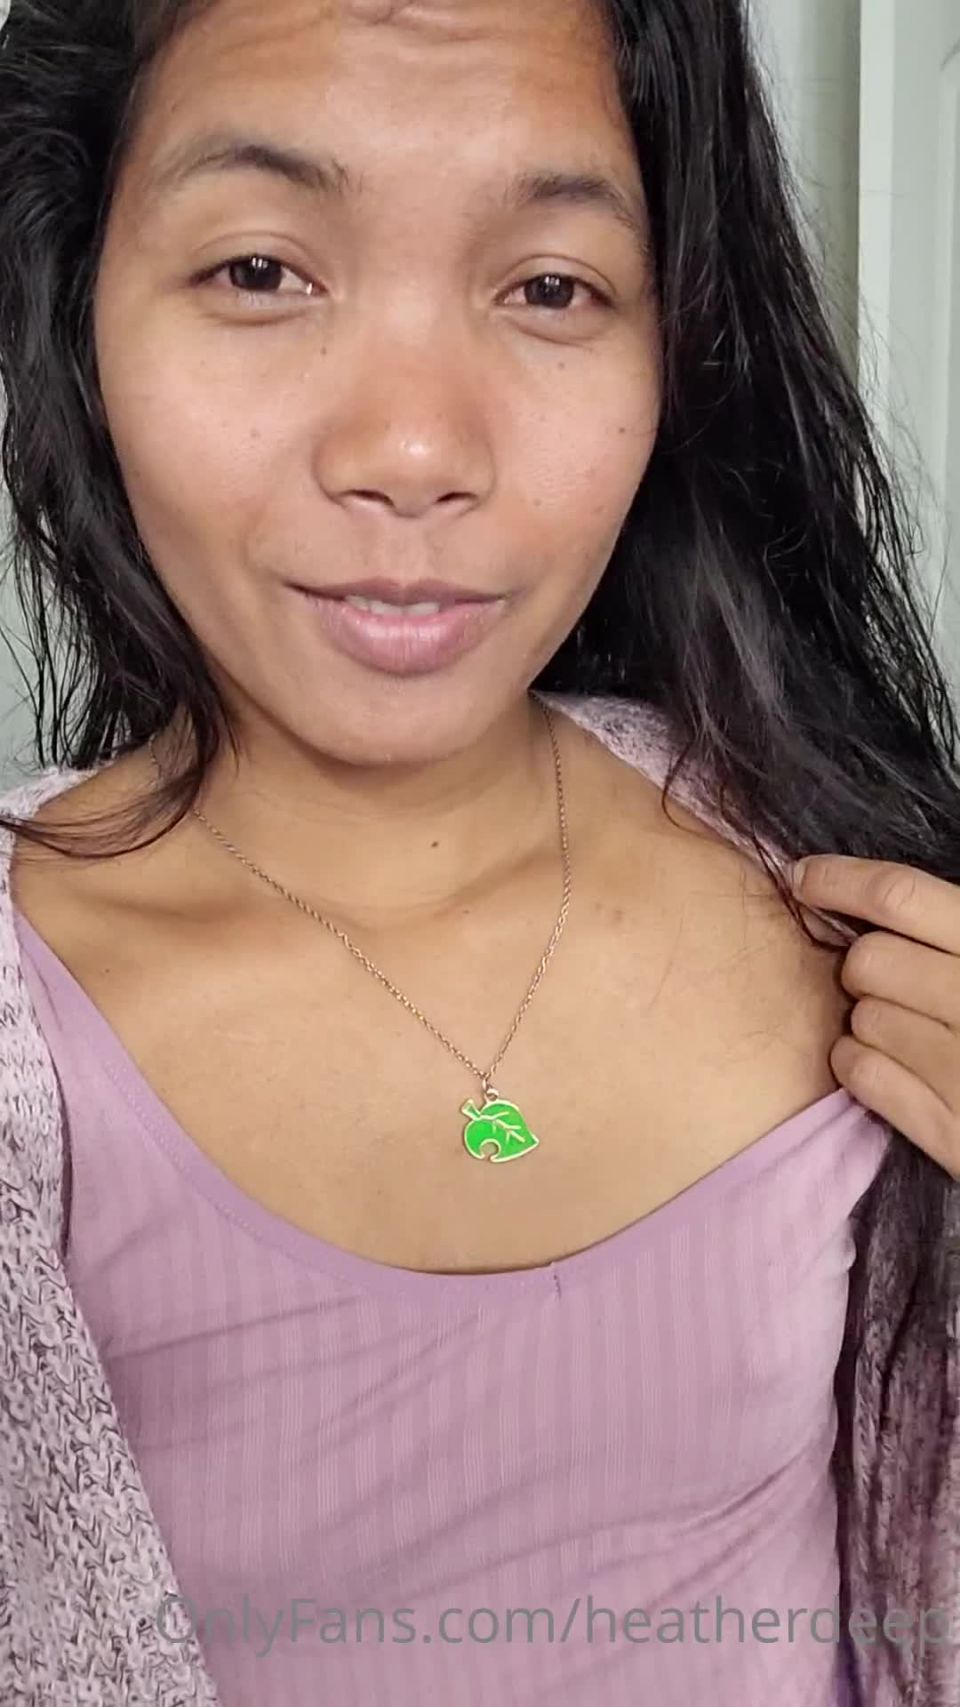 Heatherdeep () - play with me tits boobs thaigirl asian horny 27-11-2021